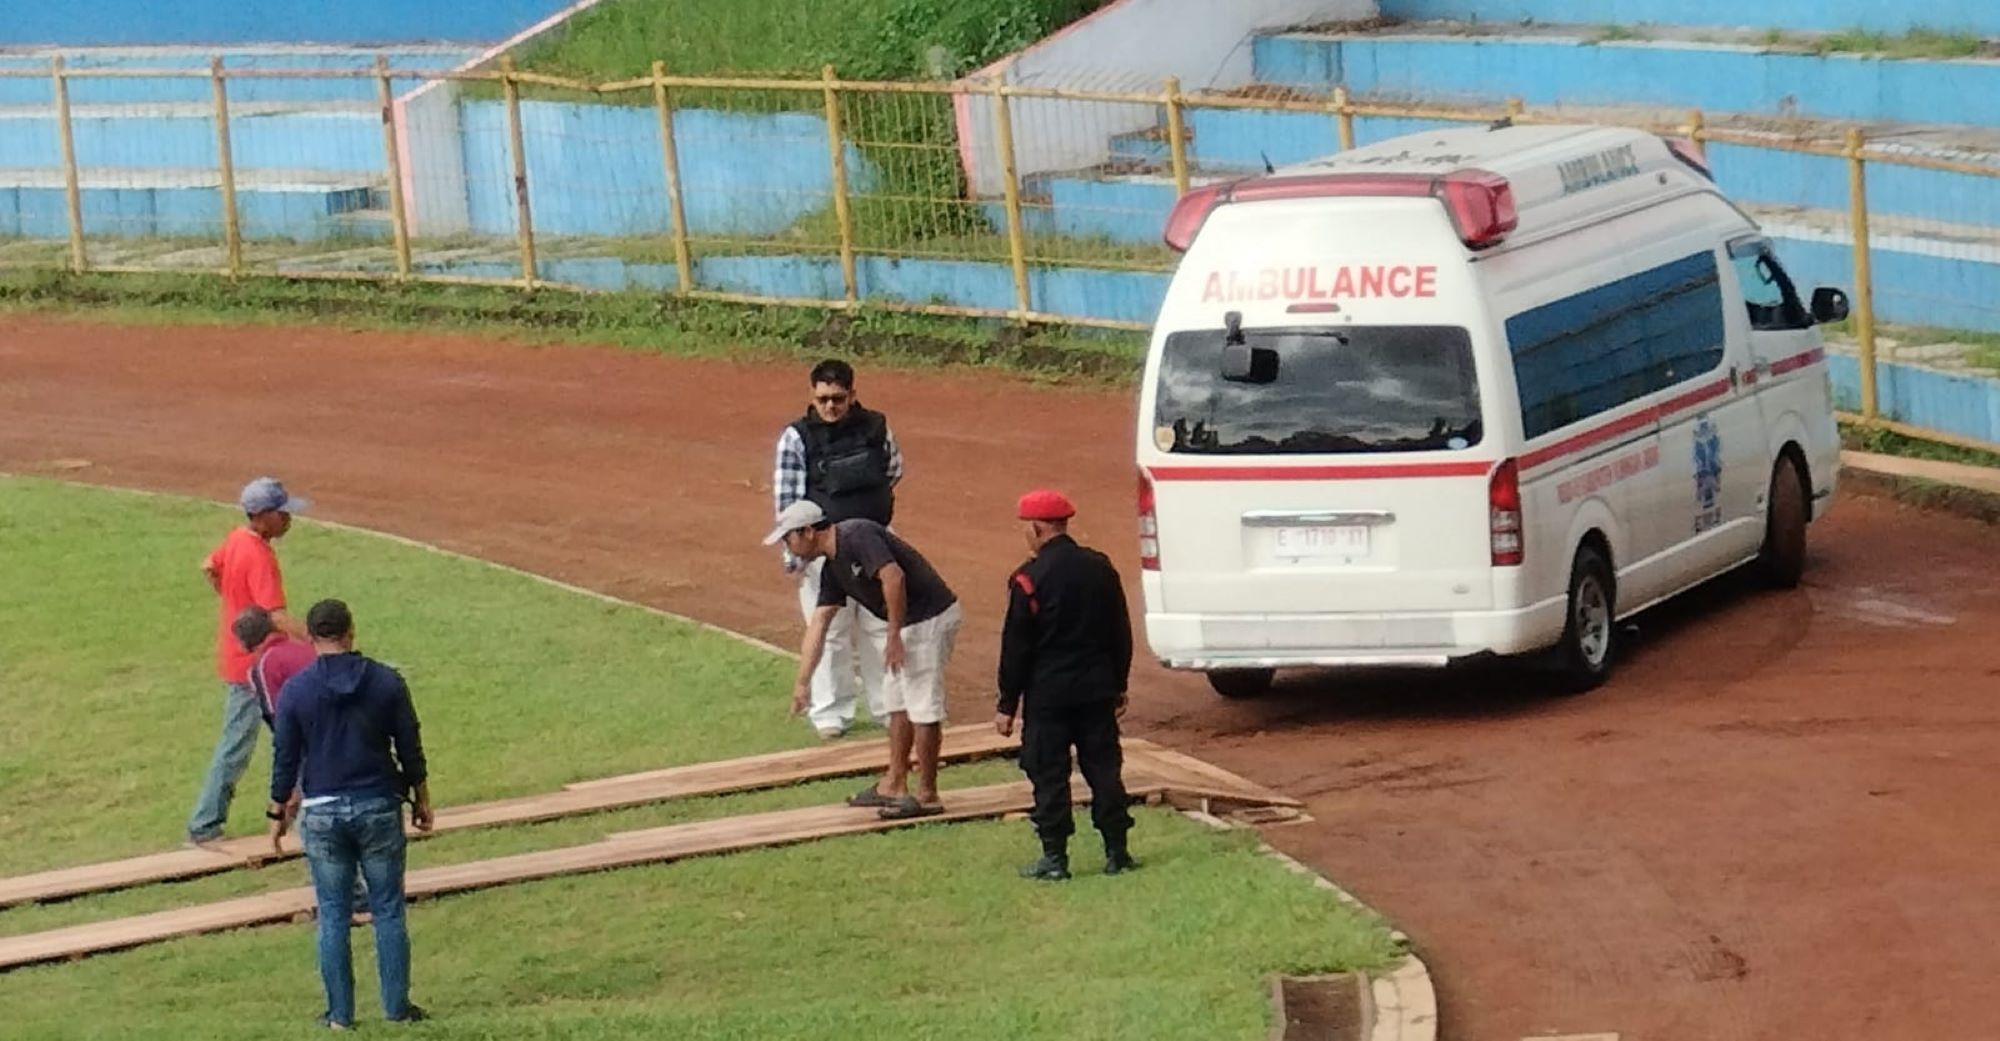 Sambil menunggu kedatangan helikopter medis, ambulan RSUD'45 Kuningan melakukan simulasi evakuasi di Stadion Masud Wisnu Saputra Kuningan.